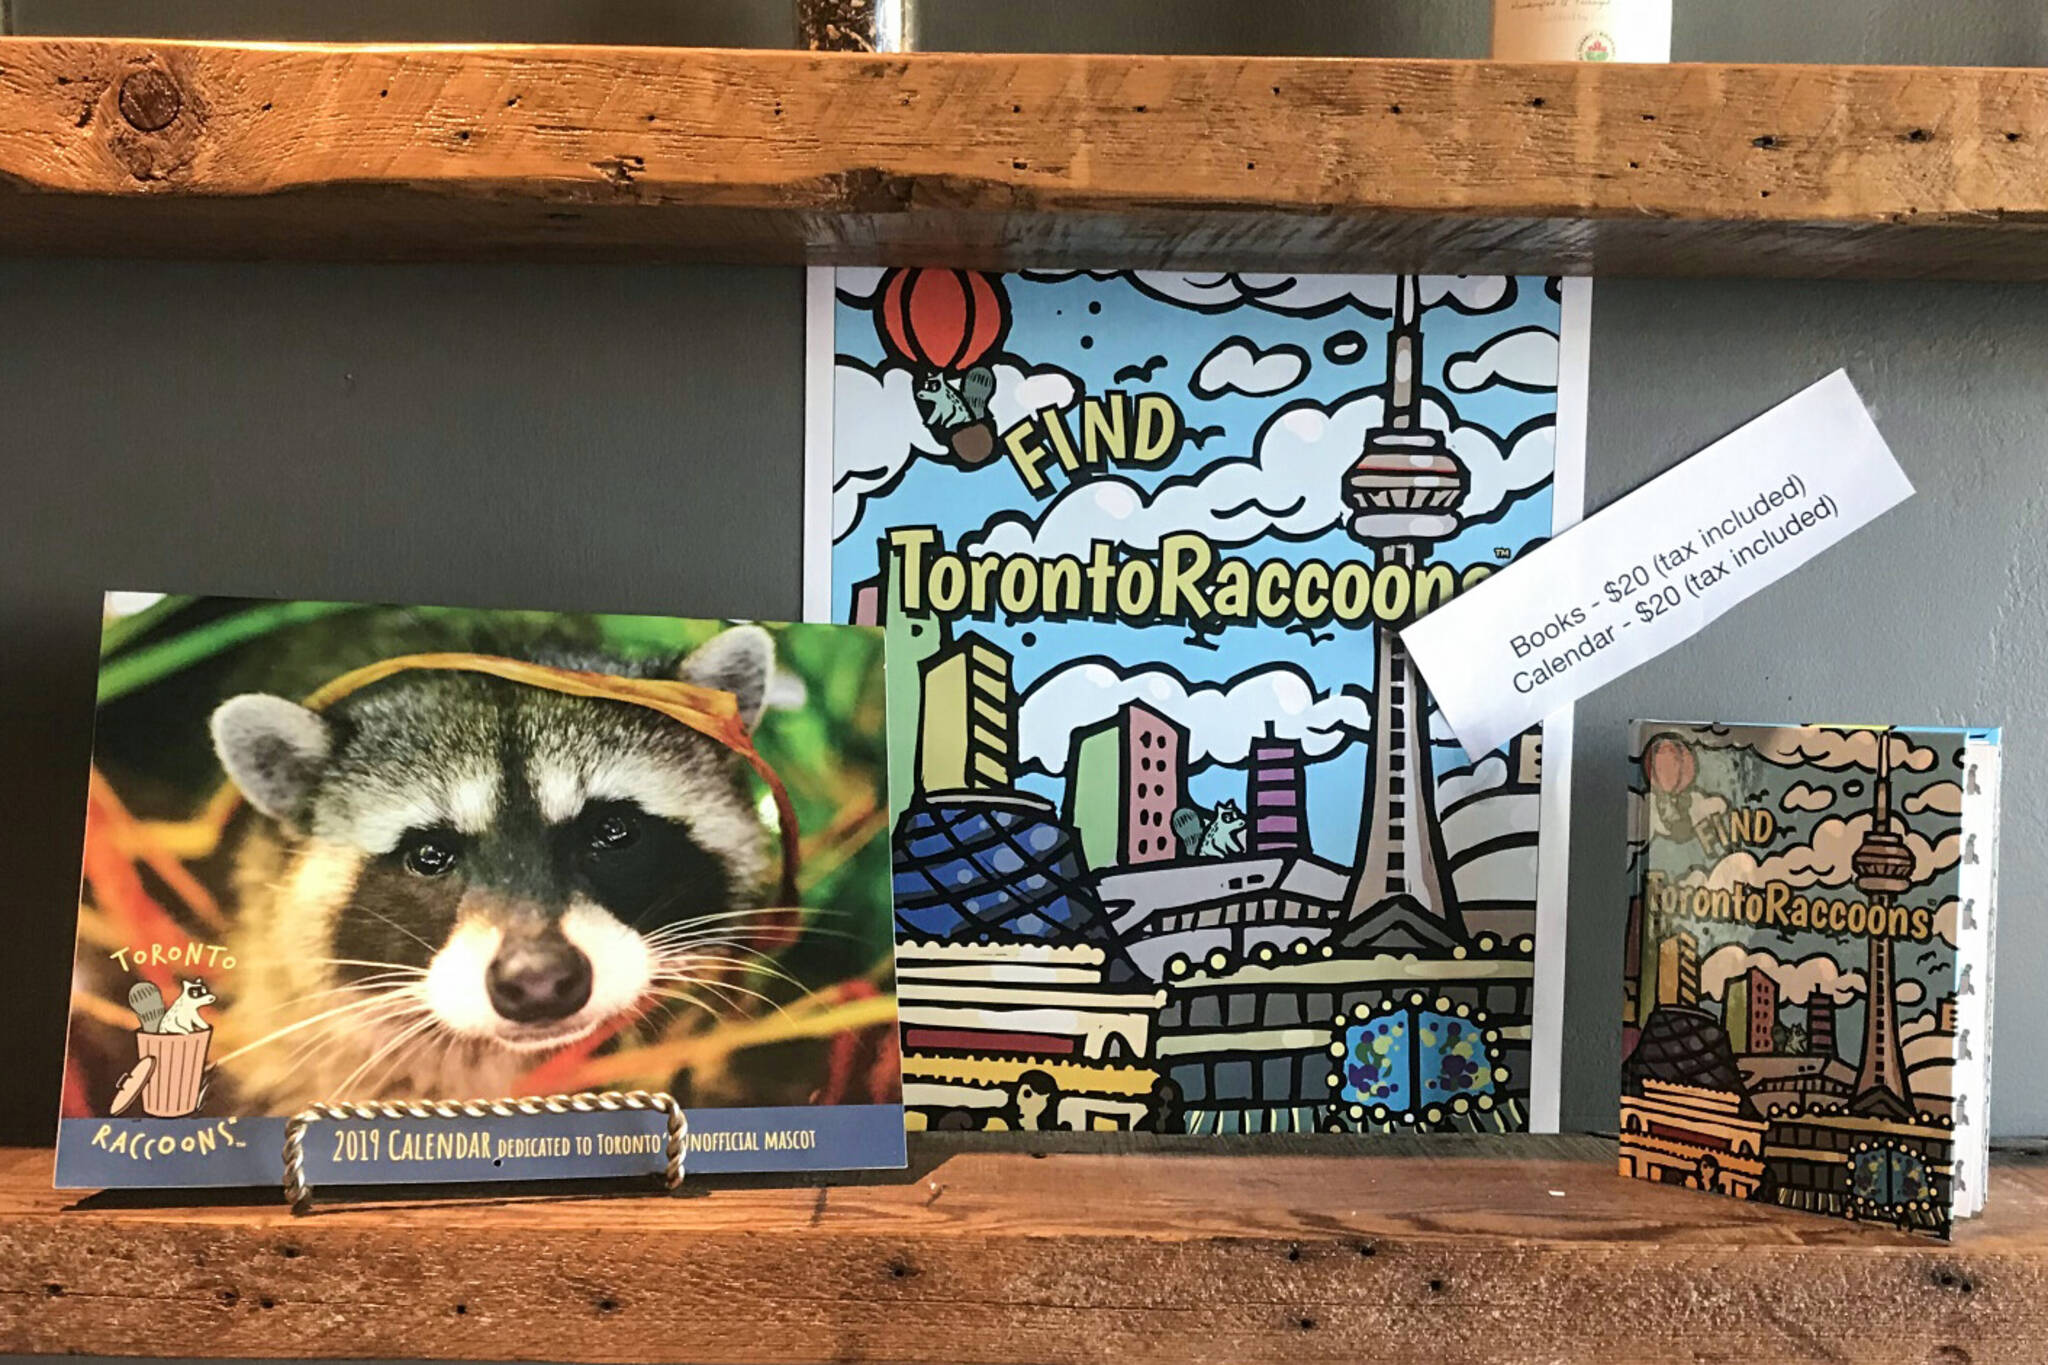 Toronto Raccoons book